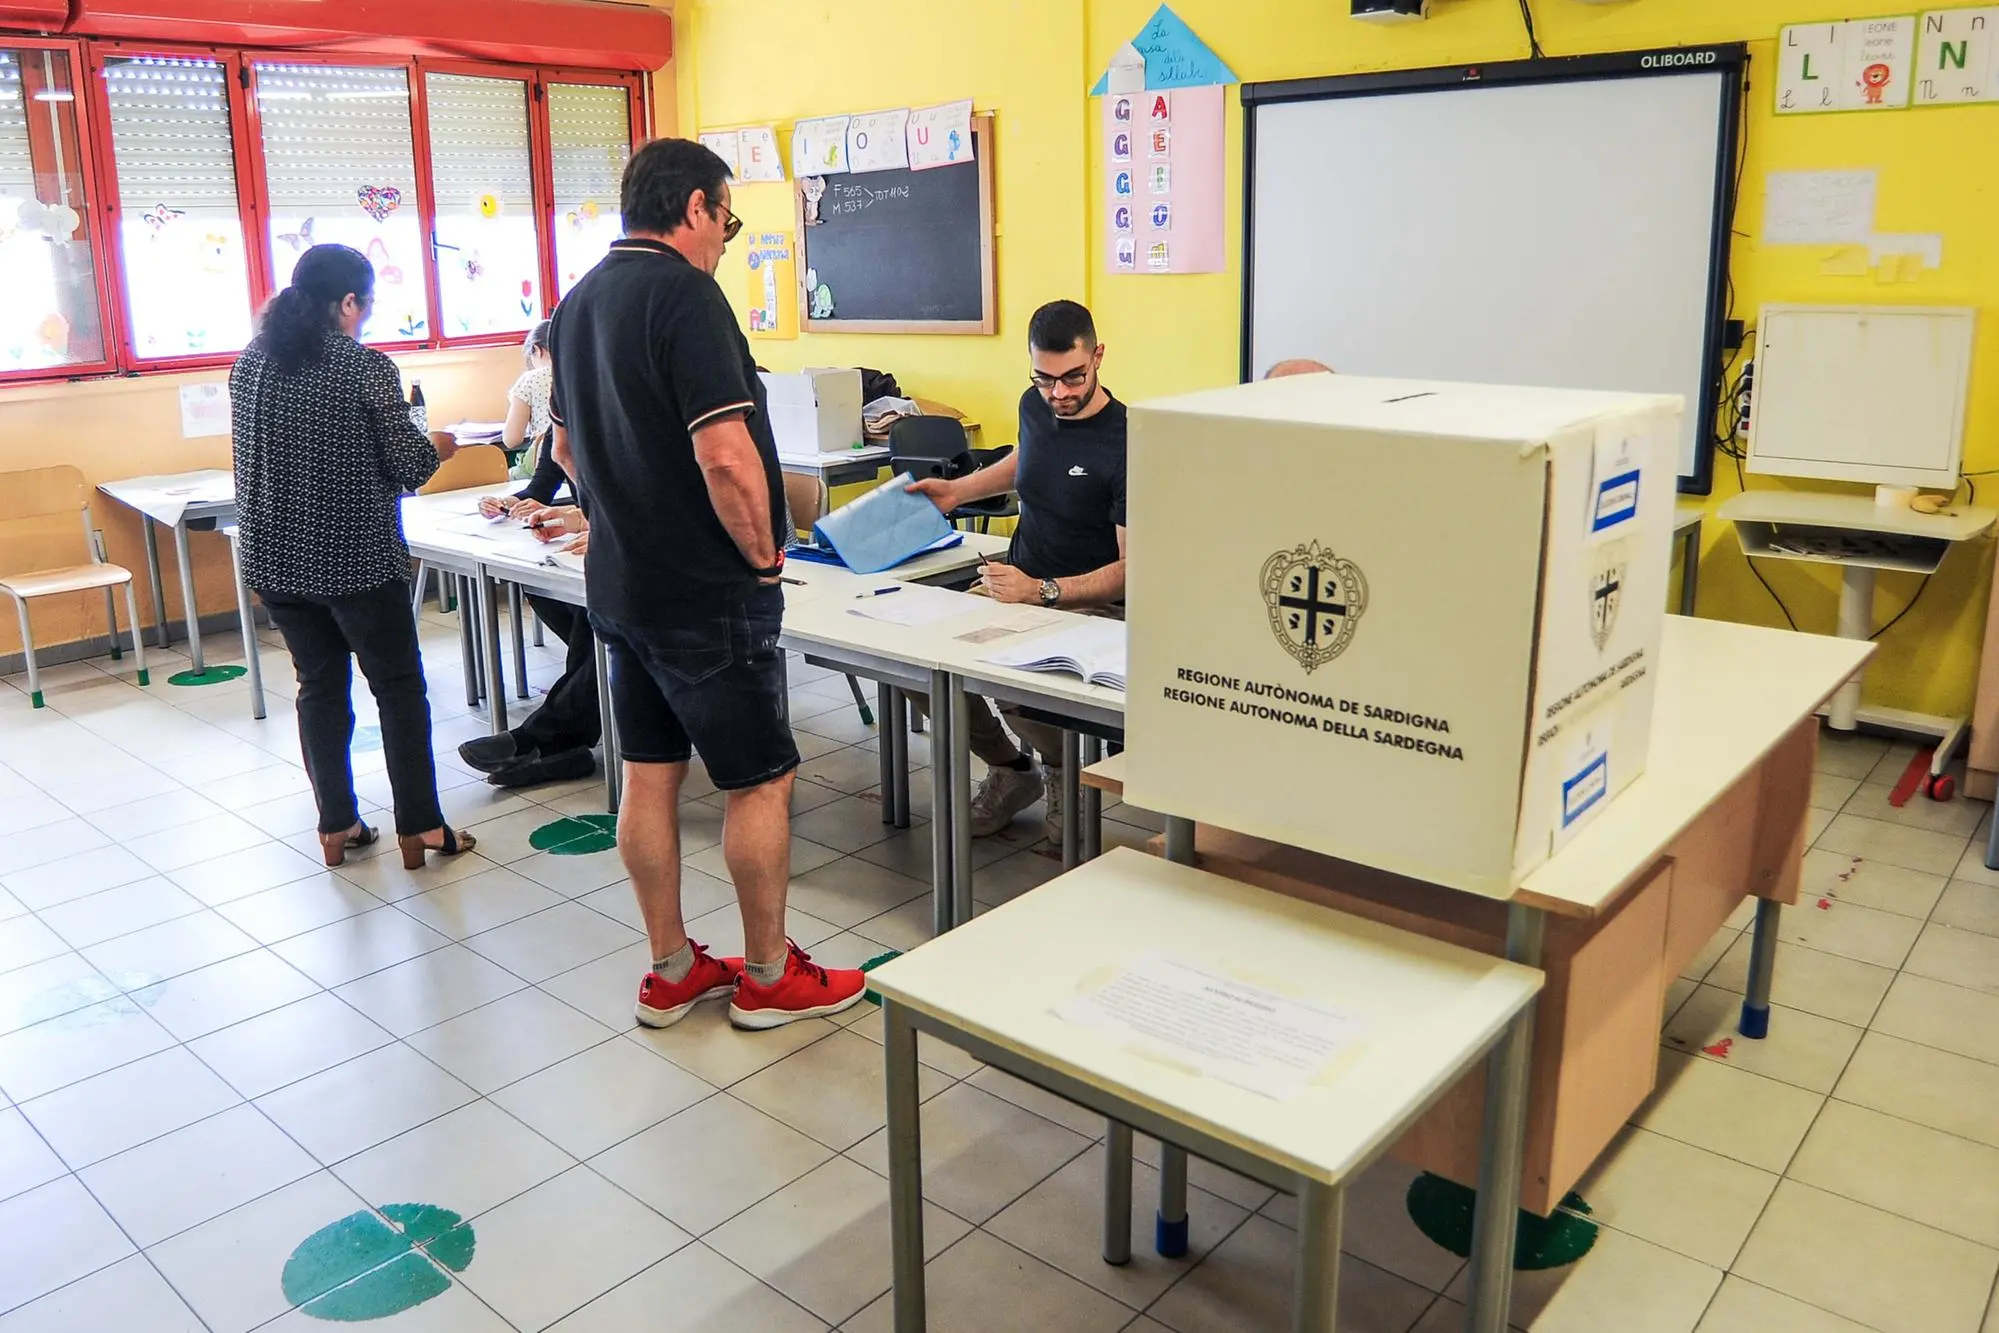 A polling station in Assemini (Photo Cucca)